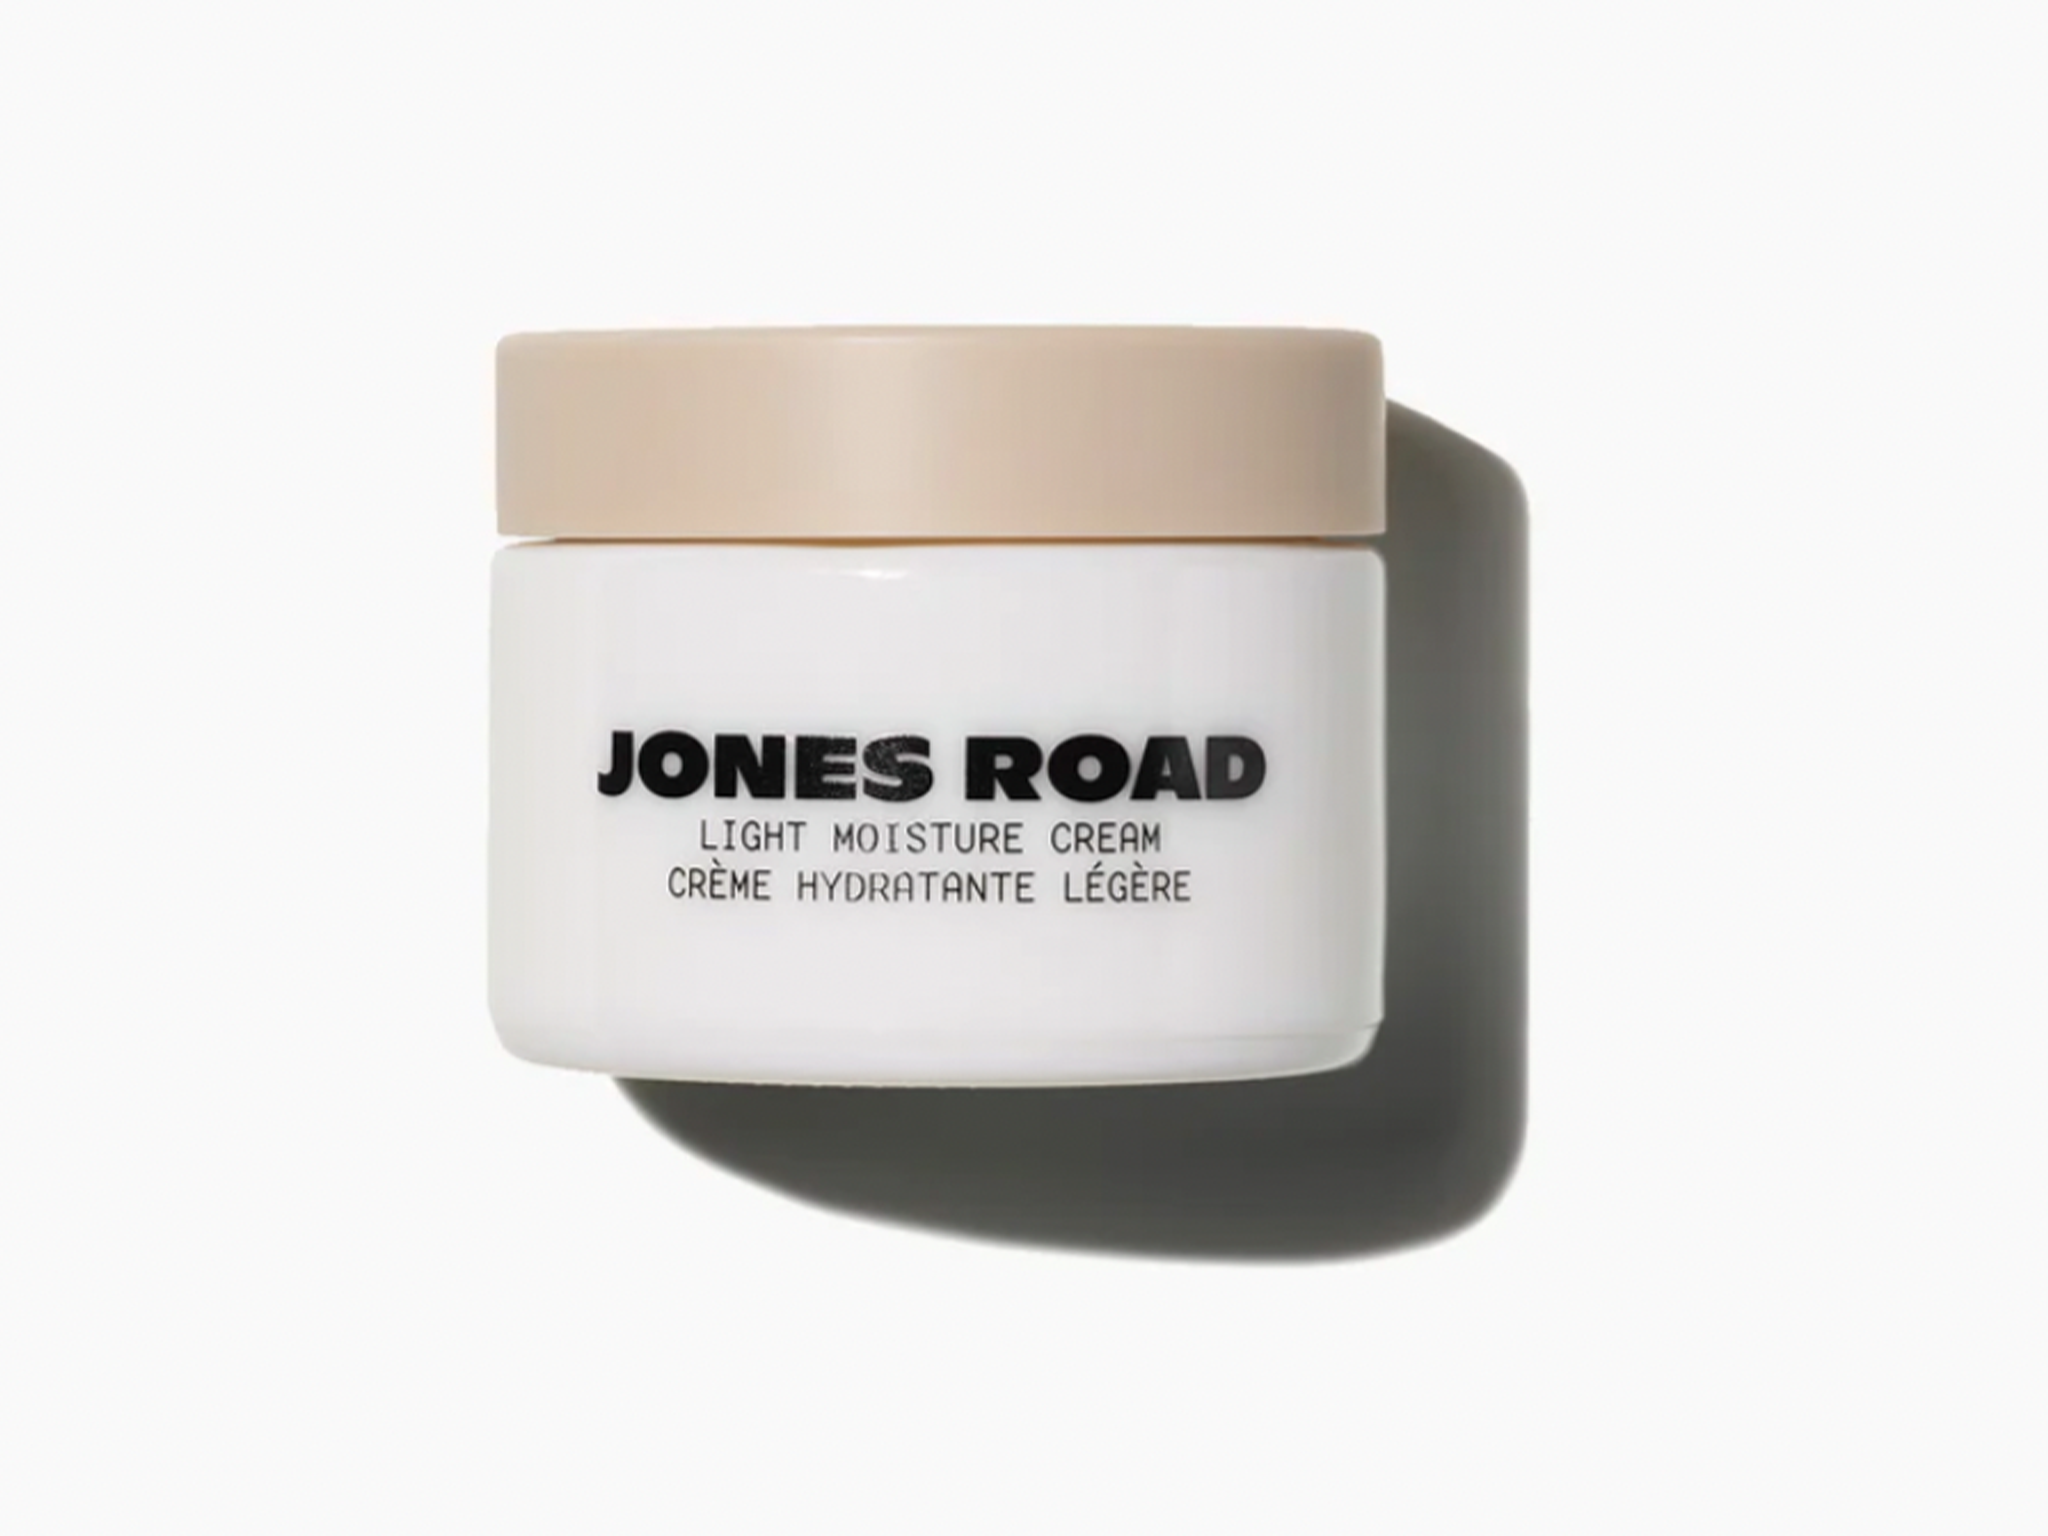 Jones Road the light moisture cream review